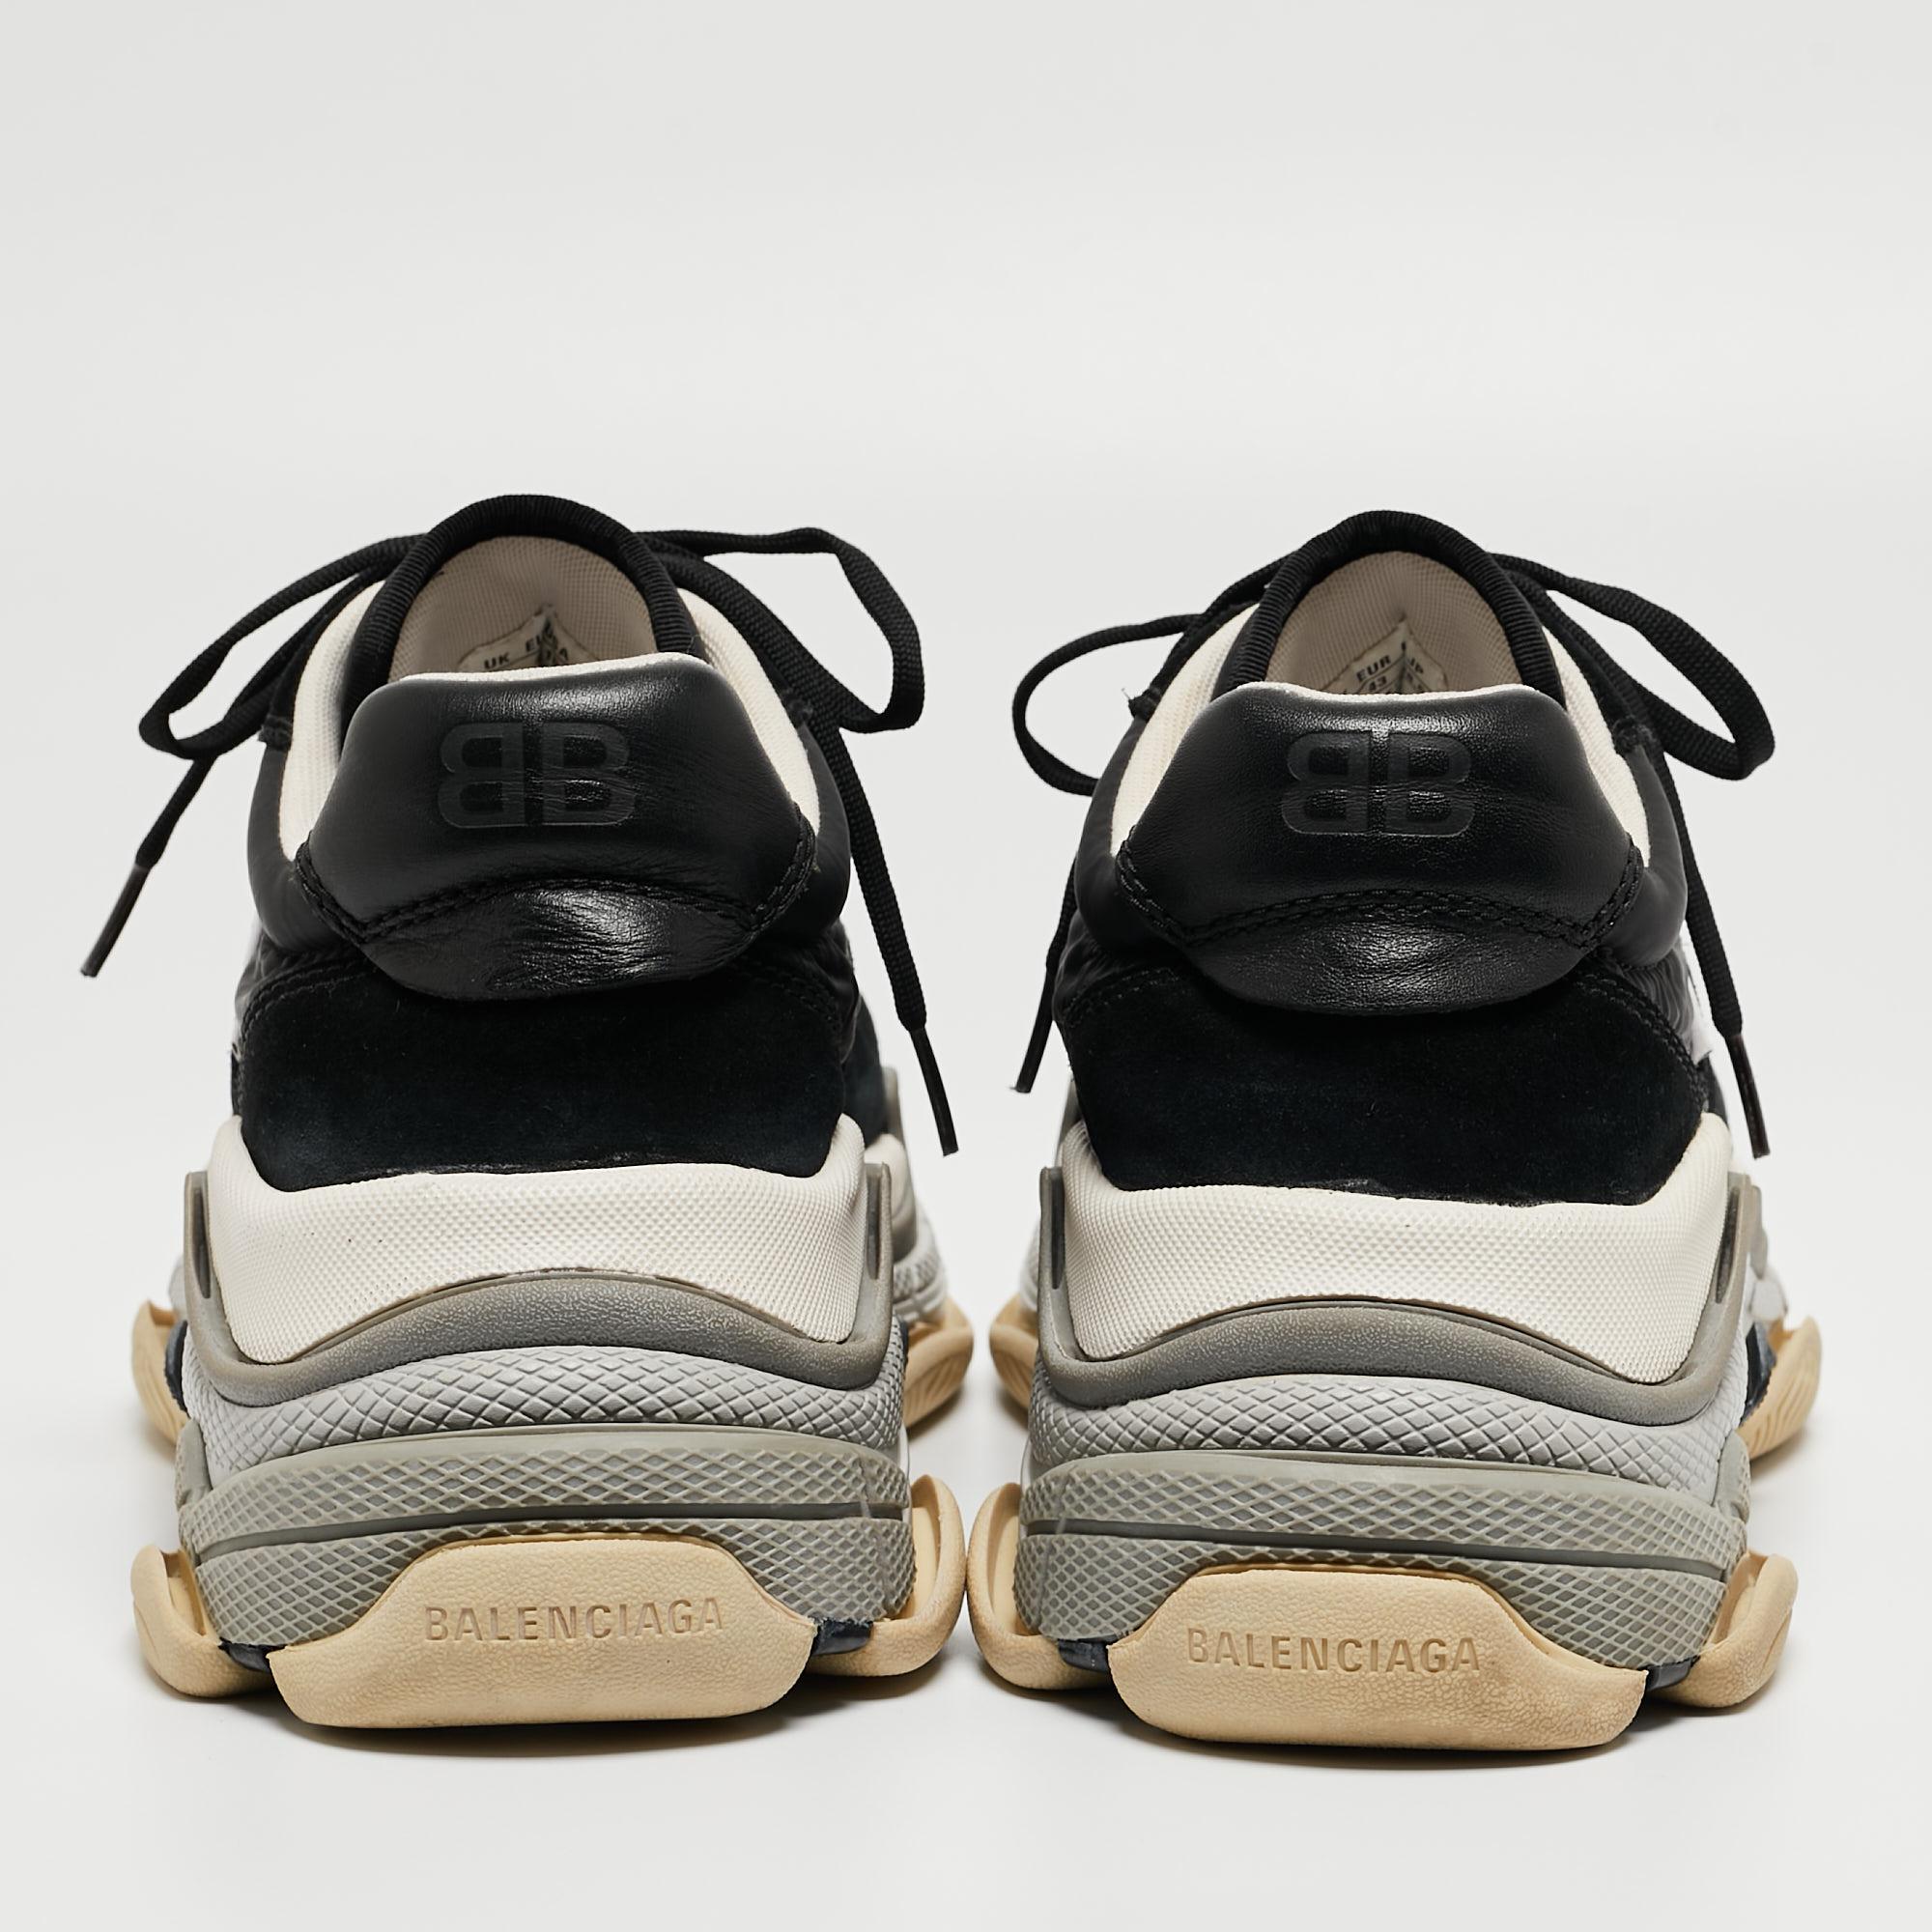 Balenciaga Black/Burgundy Suede and Nylon Triple S Sneakers Size 43 3